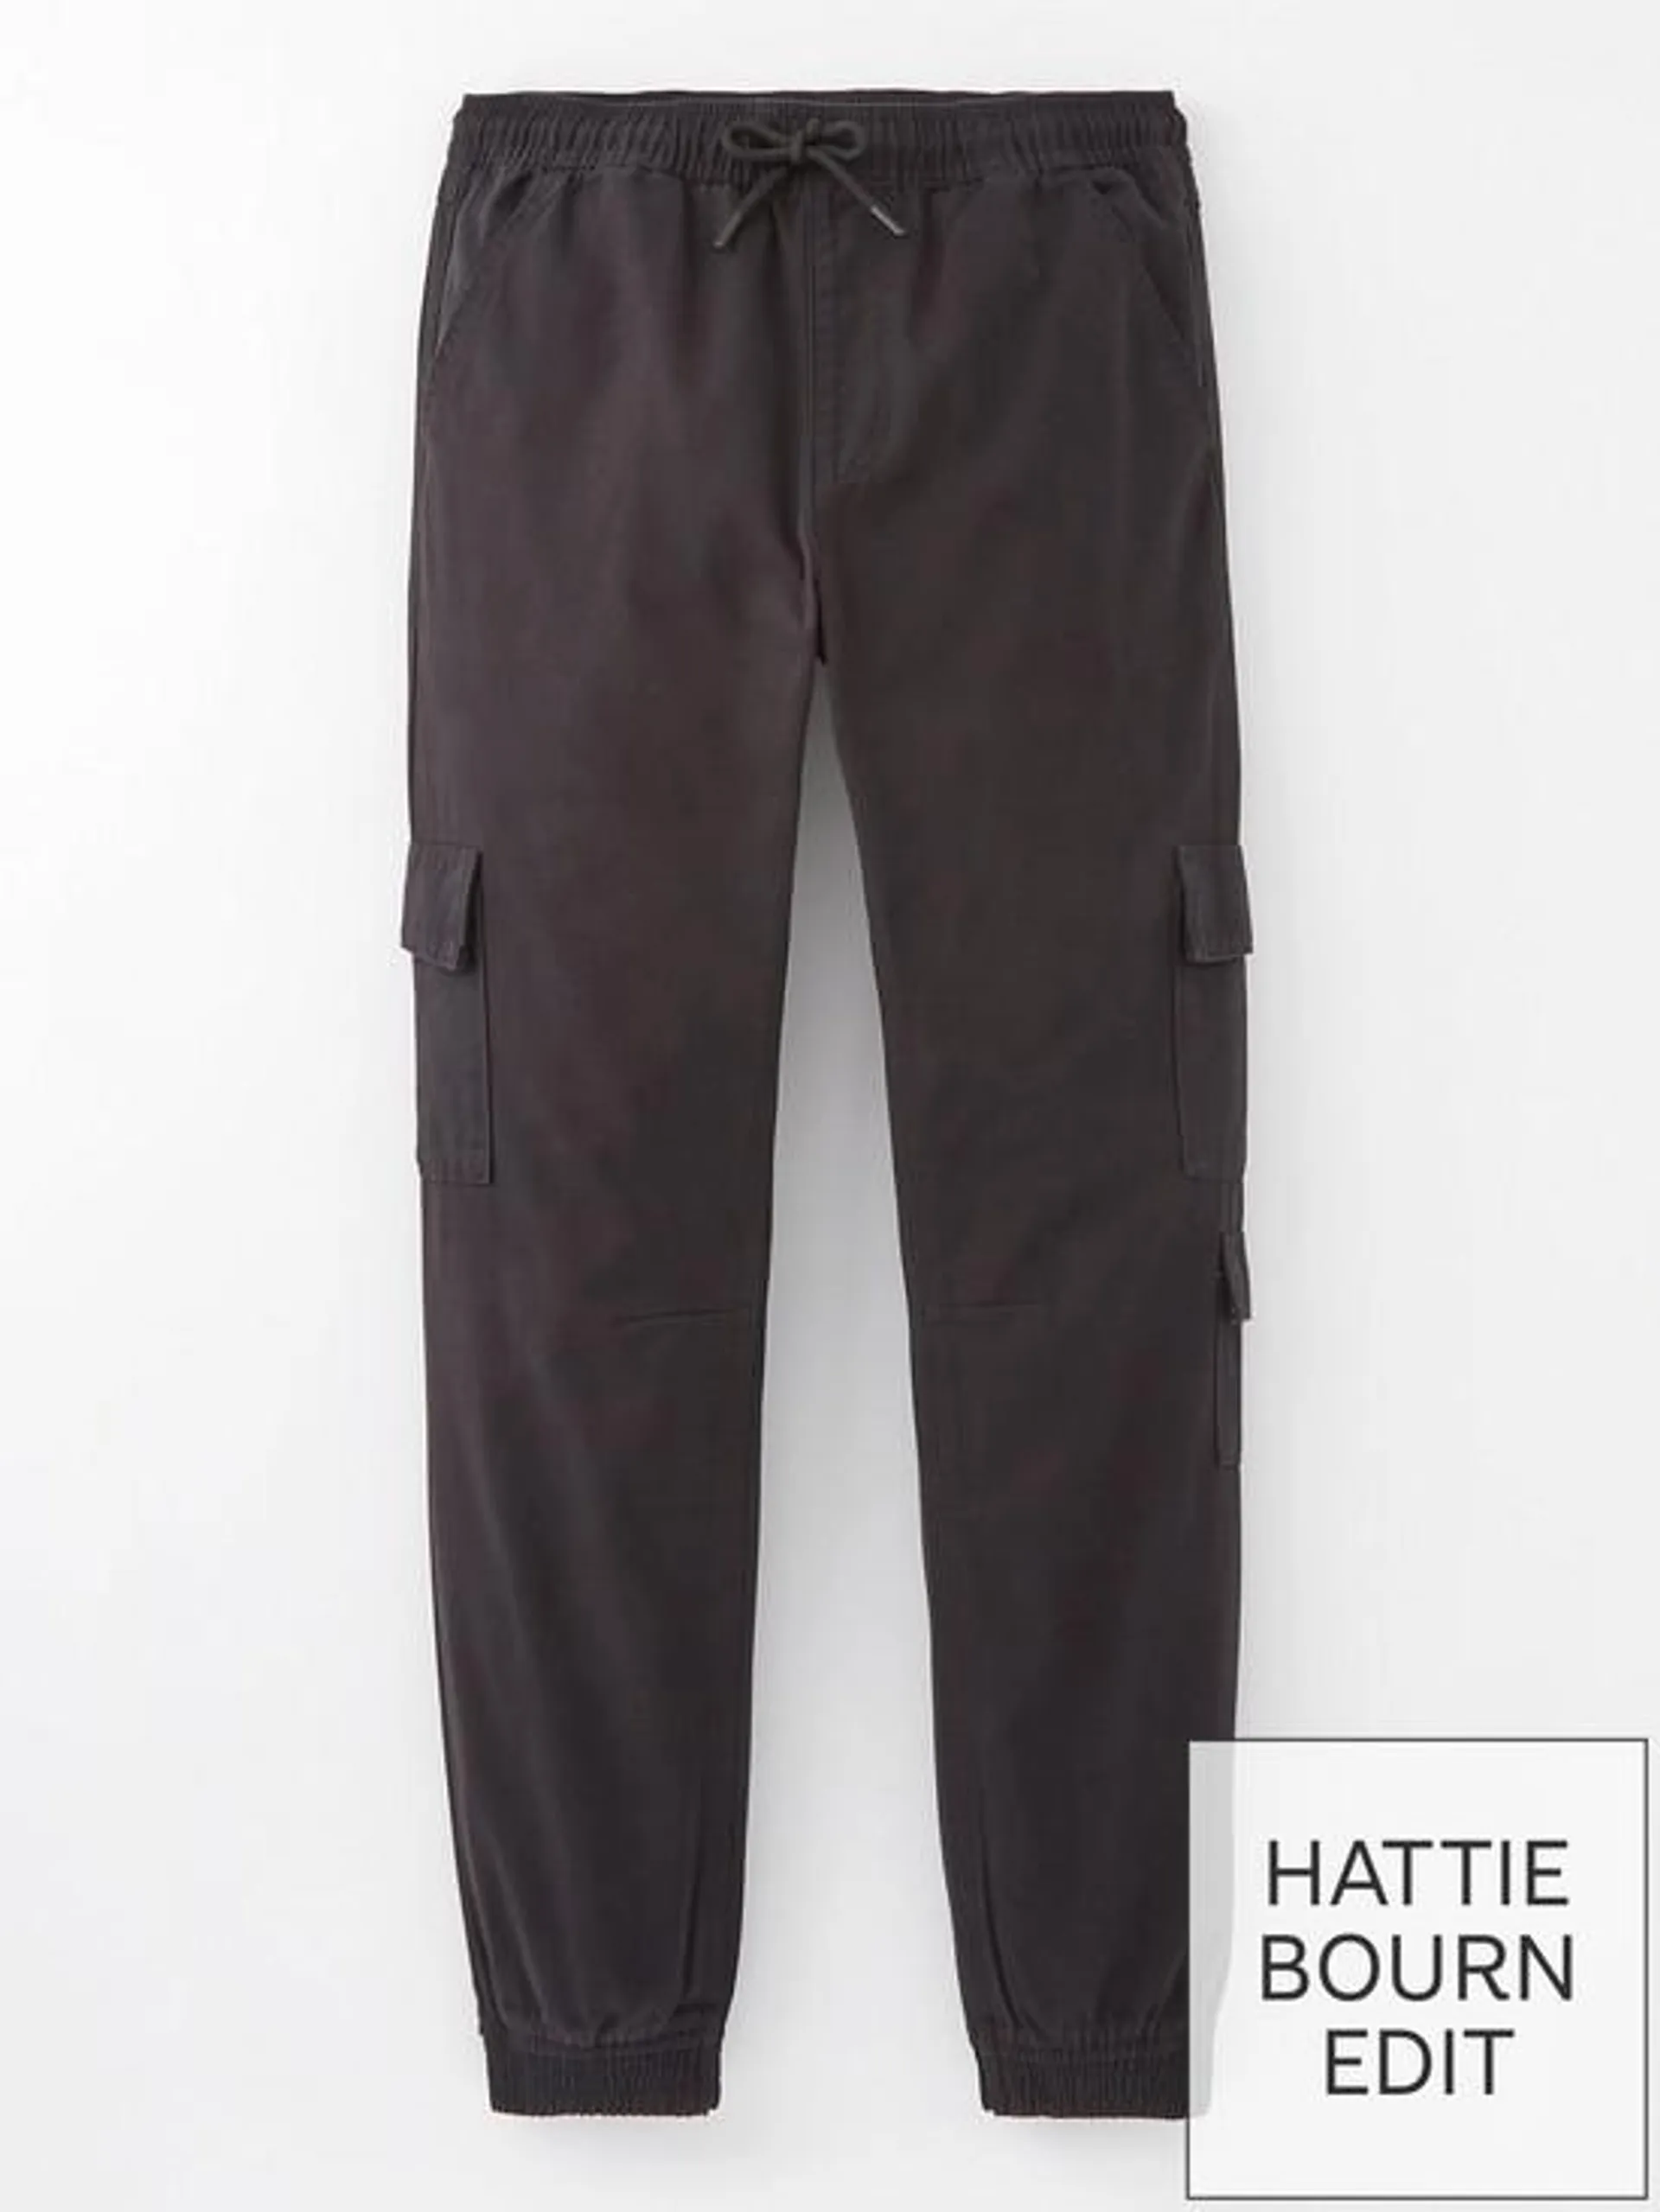 X Hattie Bourn Boys Cargo Trousers - Black